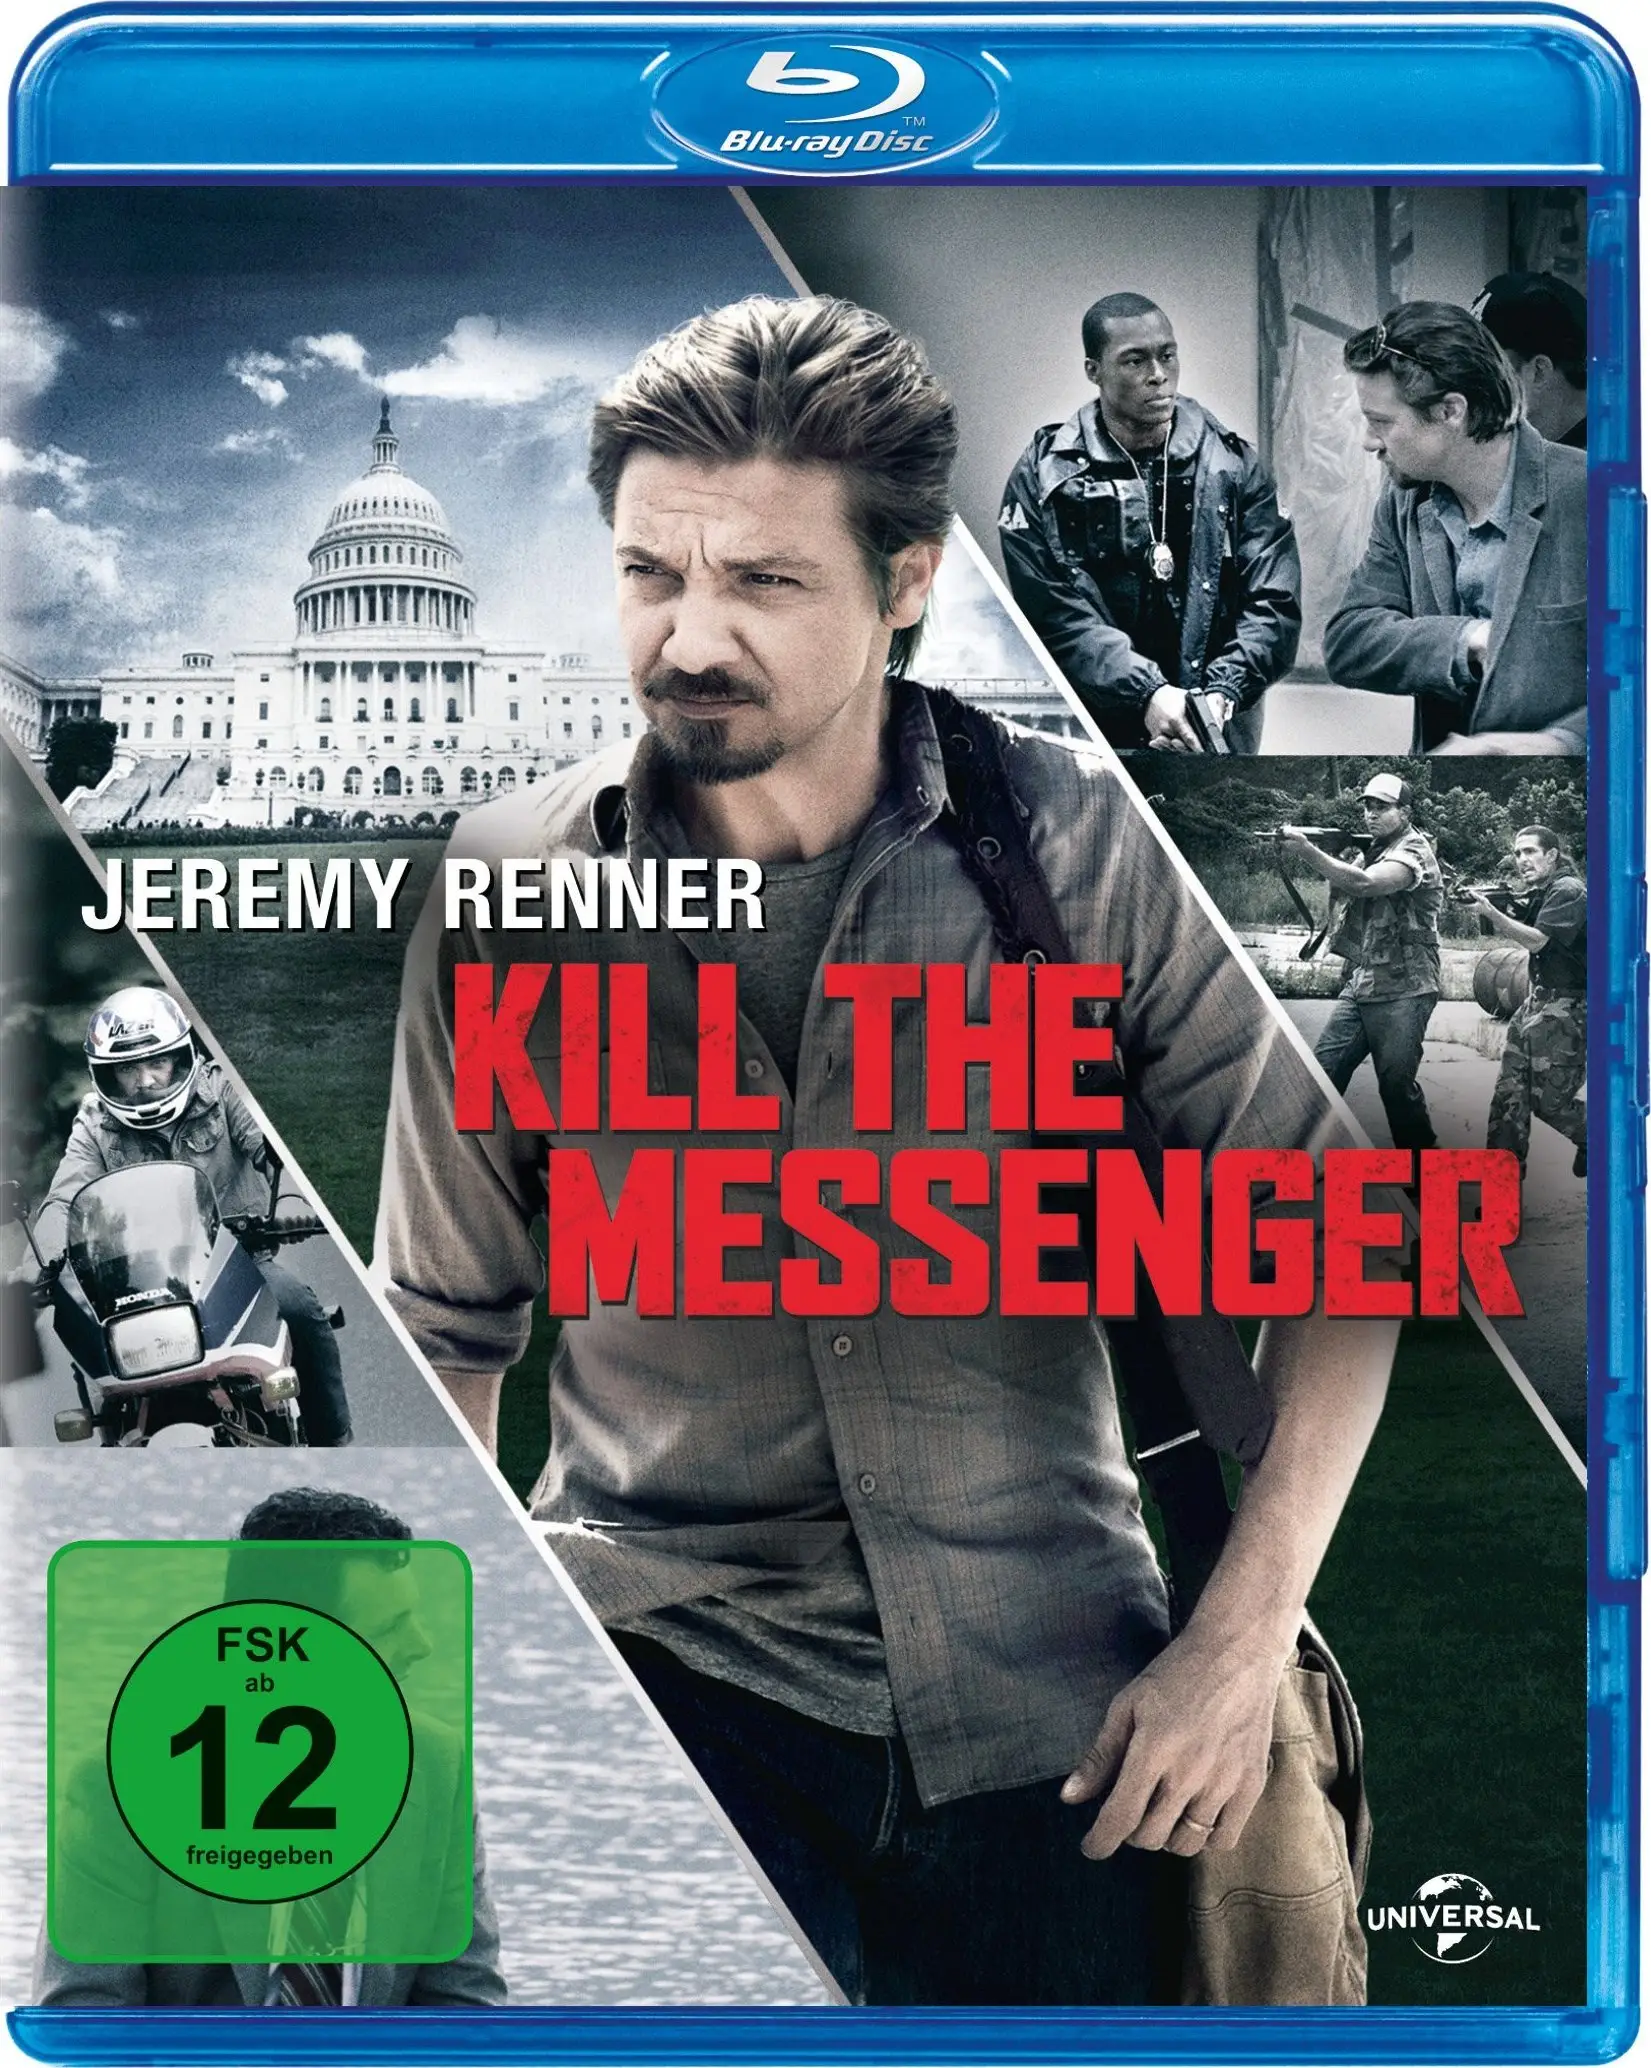 Killing the messenger. Kill the Messenger 2014 poster. REZODRONE - Kill the Messenger. Kill the Messenger (2-Disc Blu-ray/DVD Set, 2015) w/Slip Cover - Jeremy Renner. Блю мессенджер.